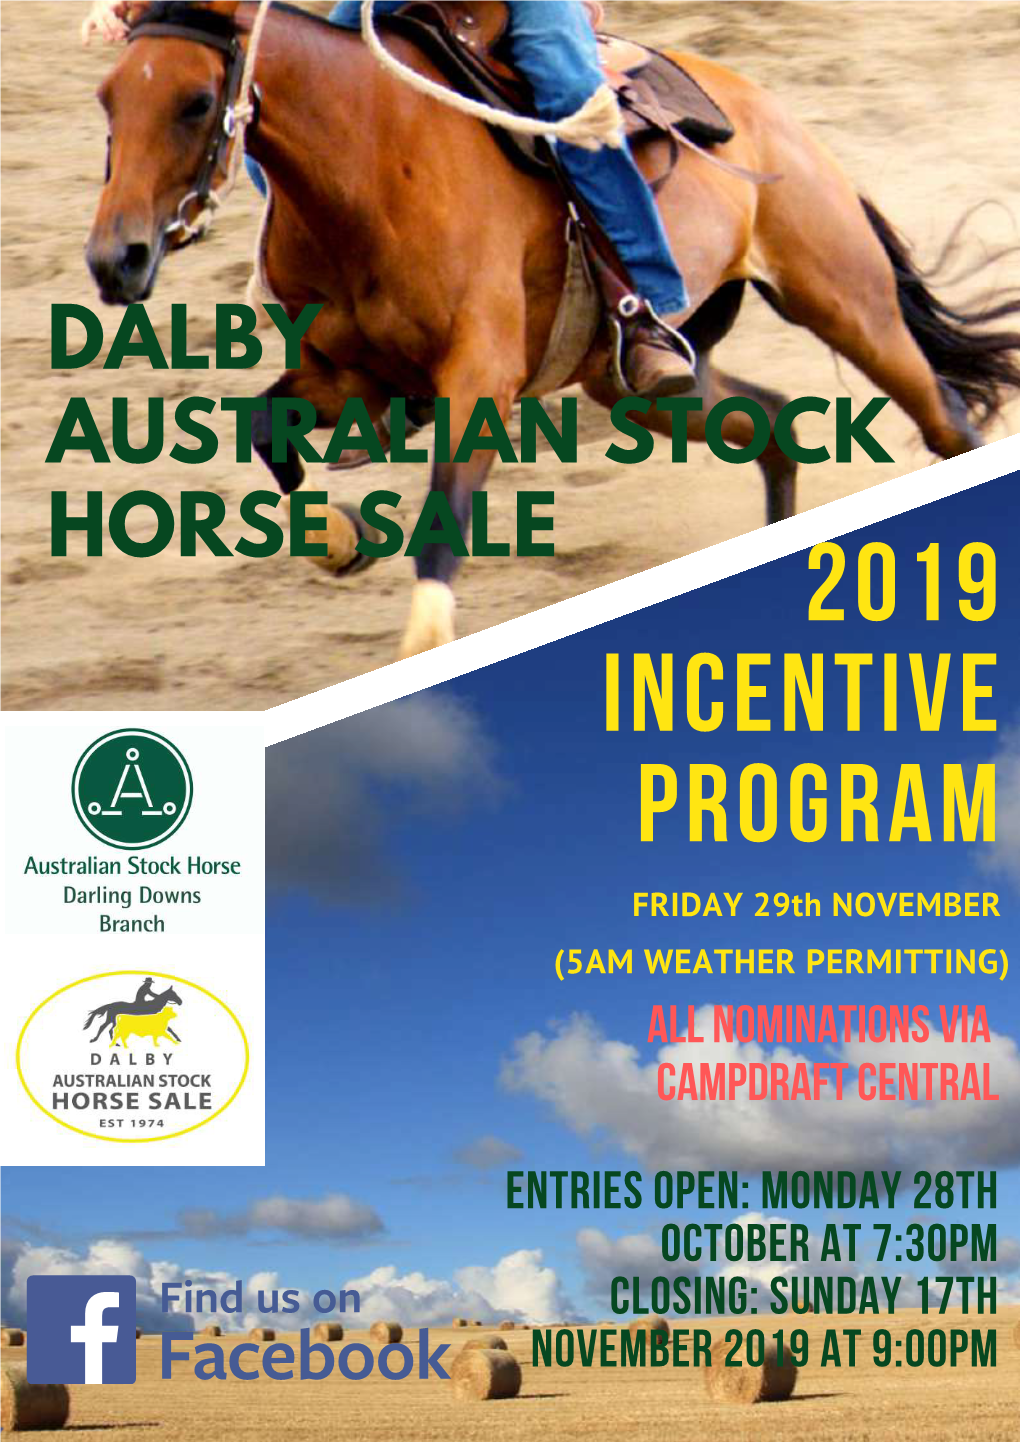 Dalby Australian Stock Horse Sale 2019 Incentive Program